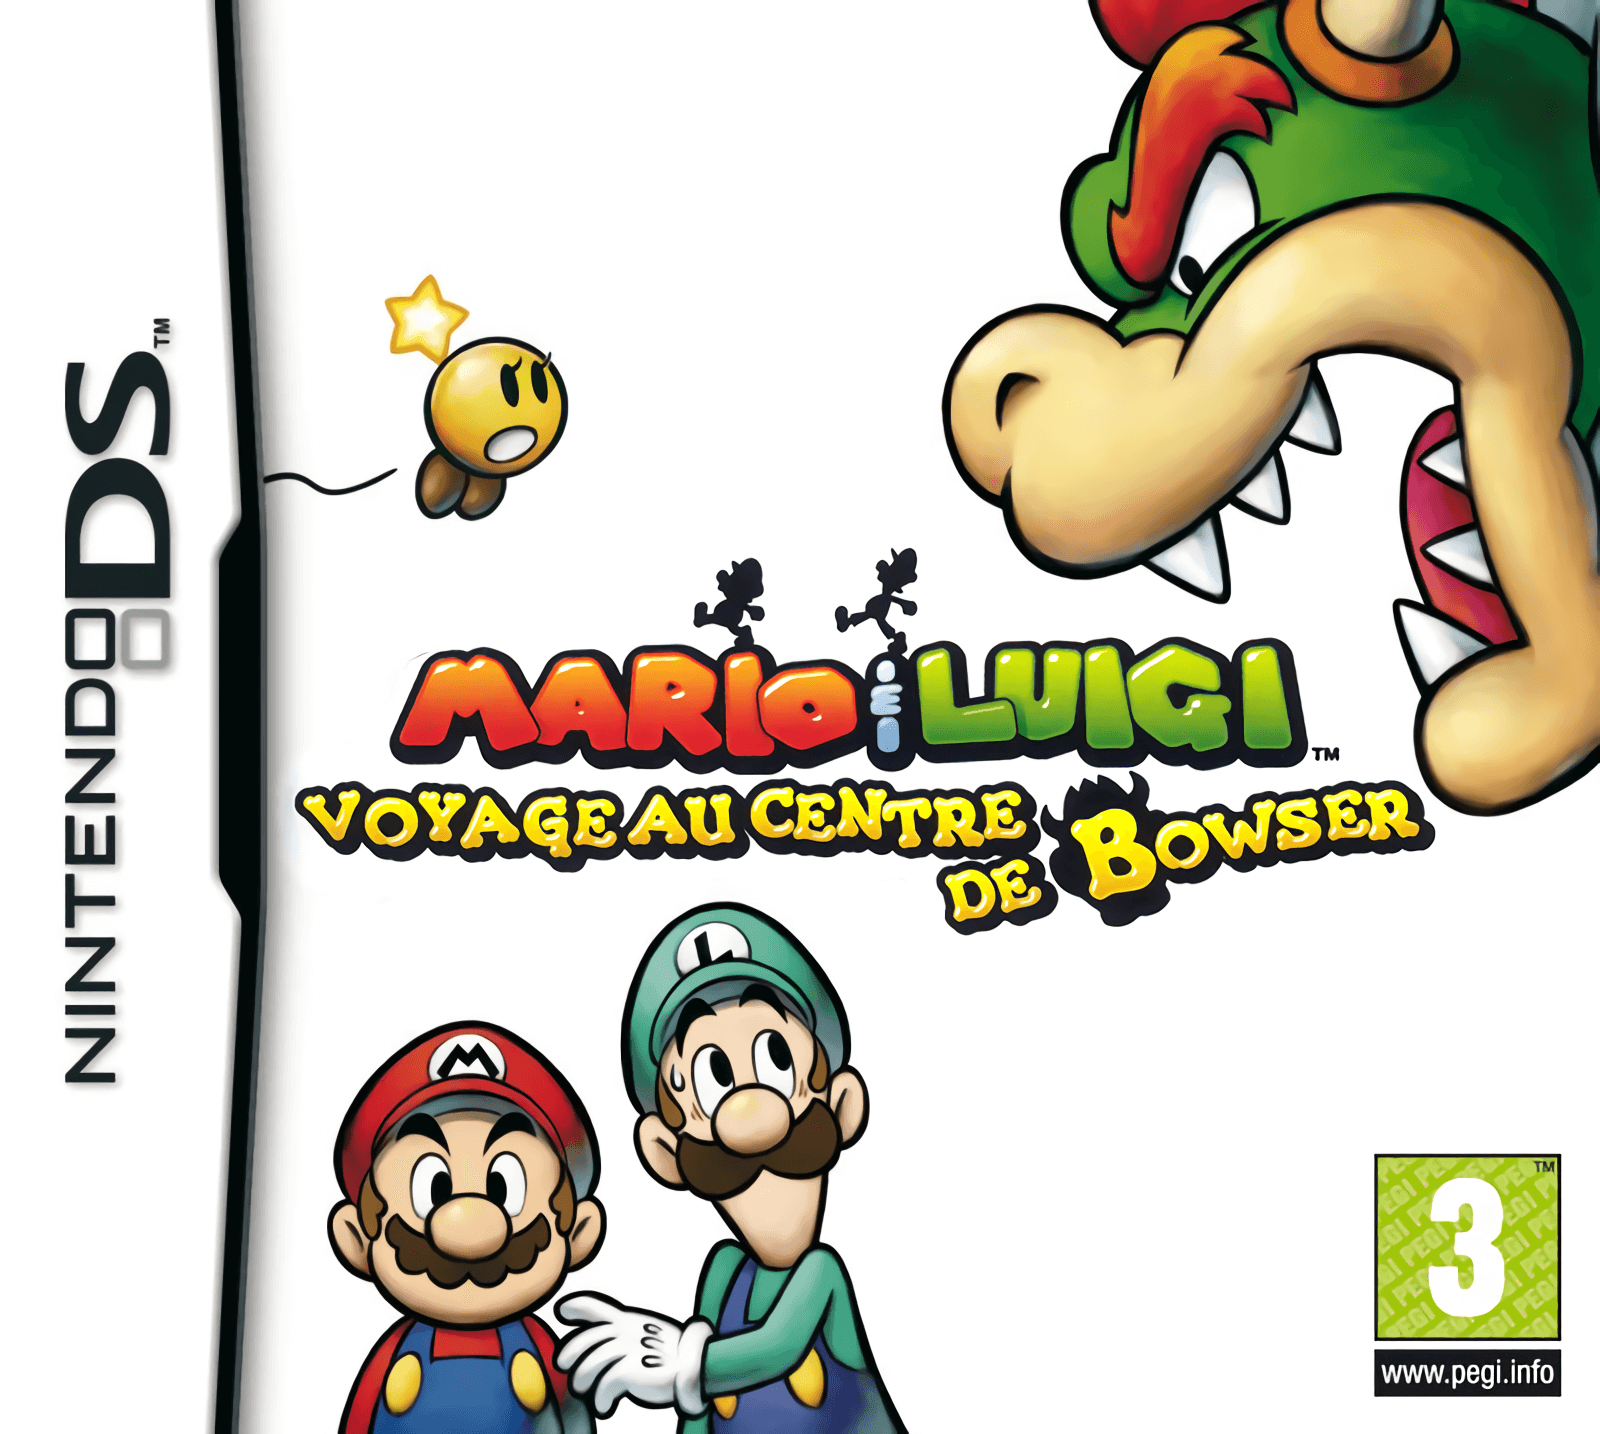 Mario story. Mario and Luigi Bowser's inside story. Mario and Luigi Bowser's inside story DS. Марио и Луиджи Боузер инсайд стори. Nintendo DS Mario and Luigi Bowser's inside story.